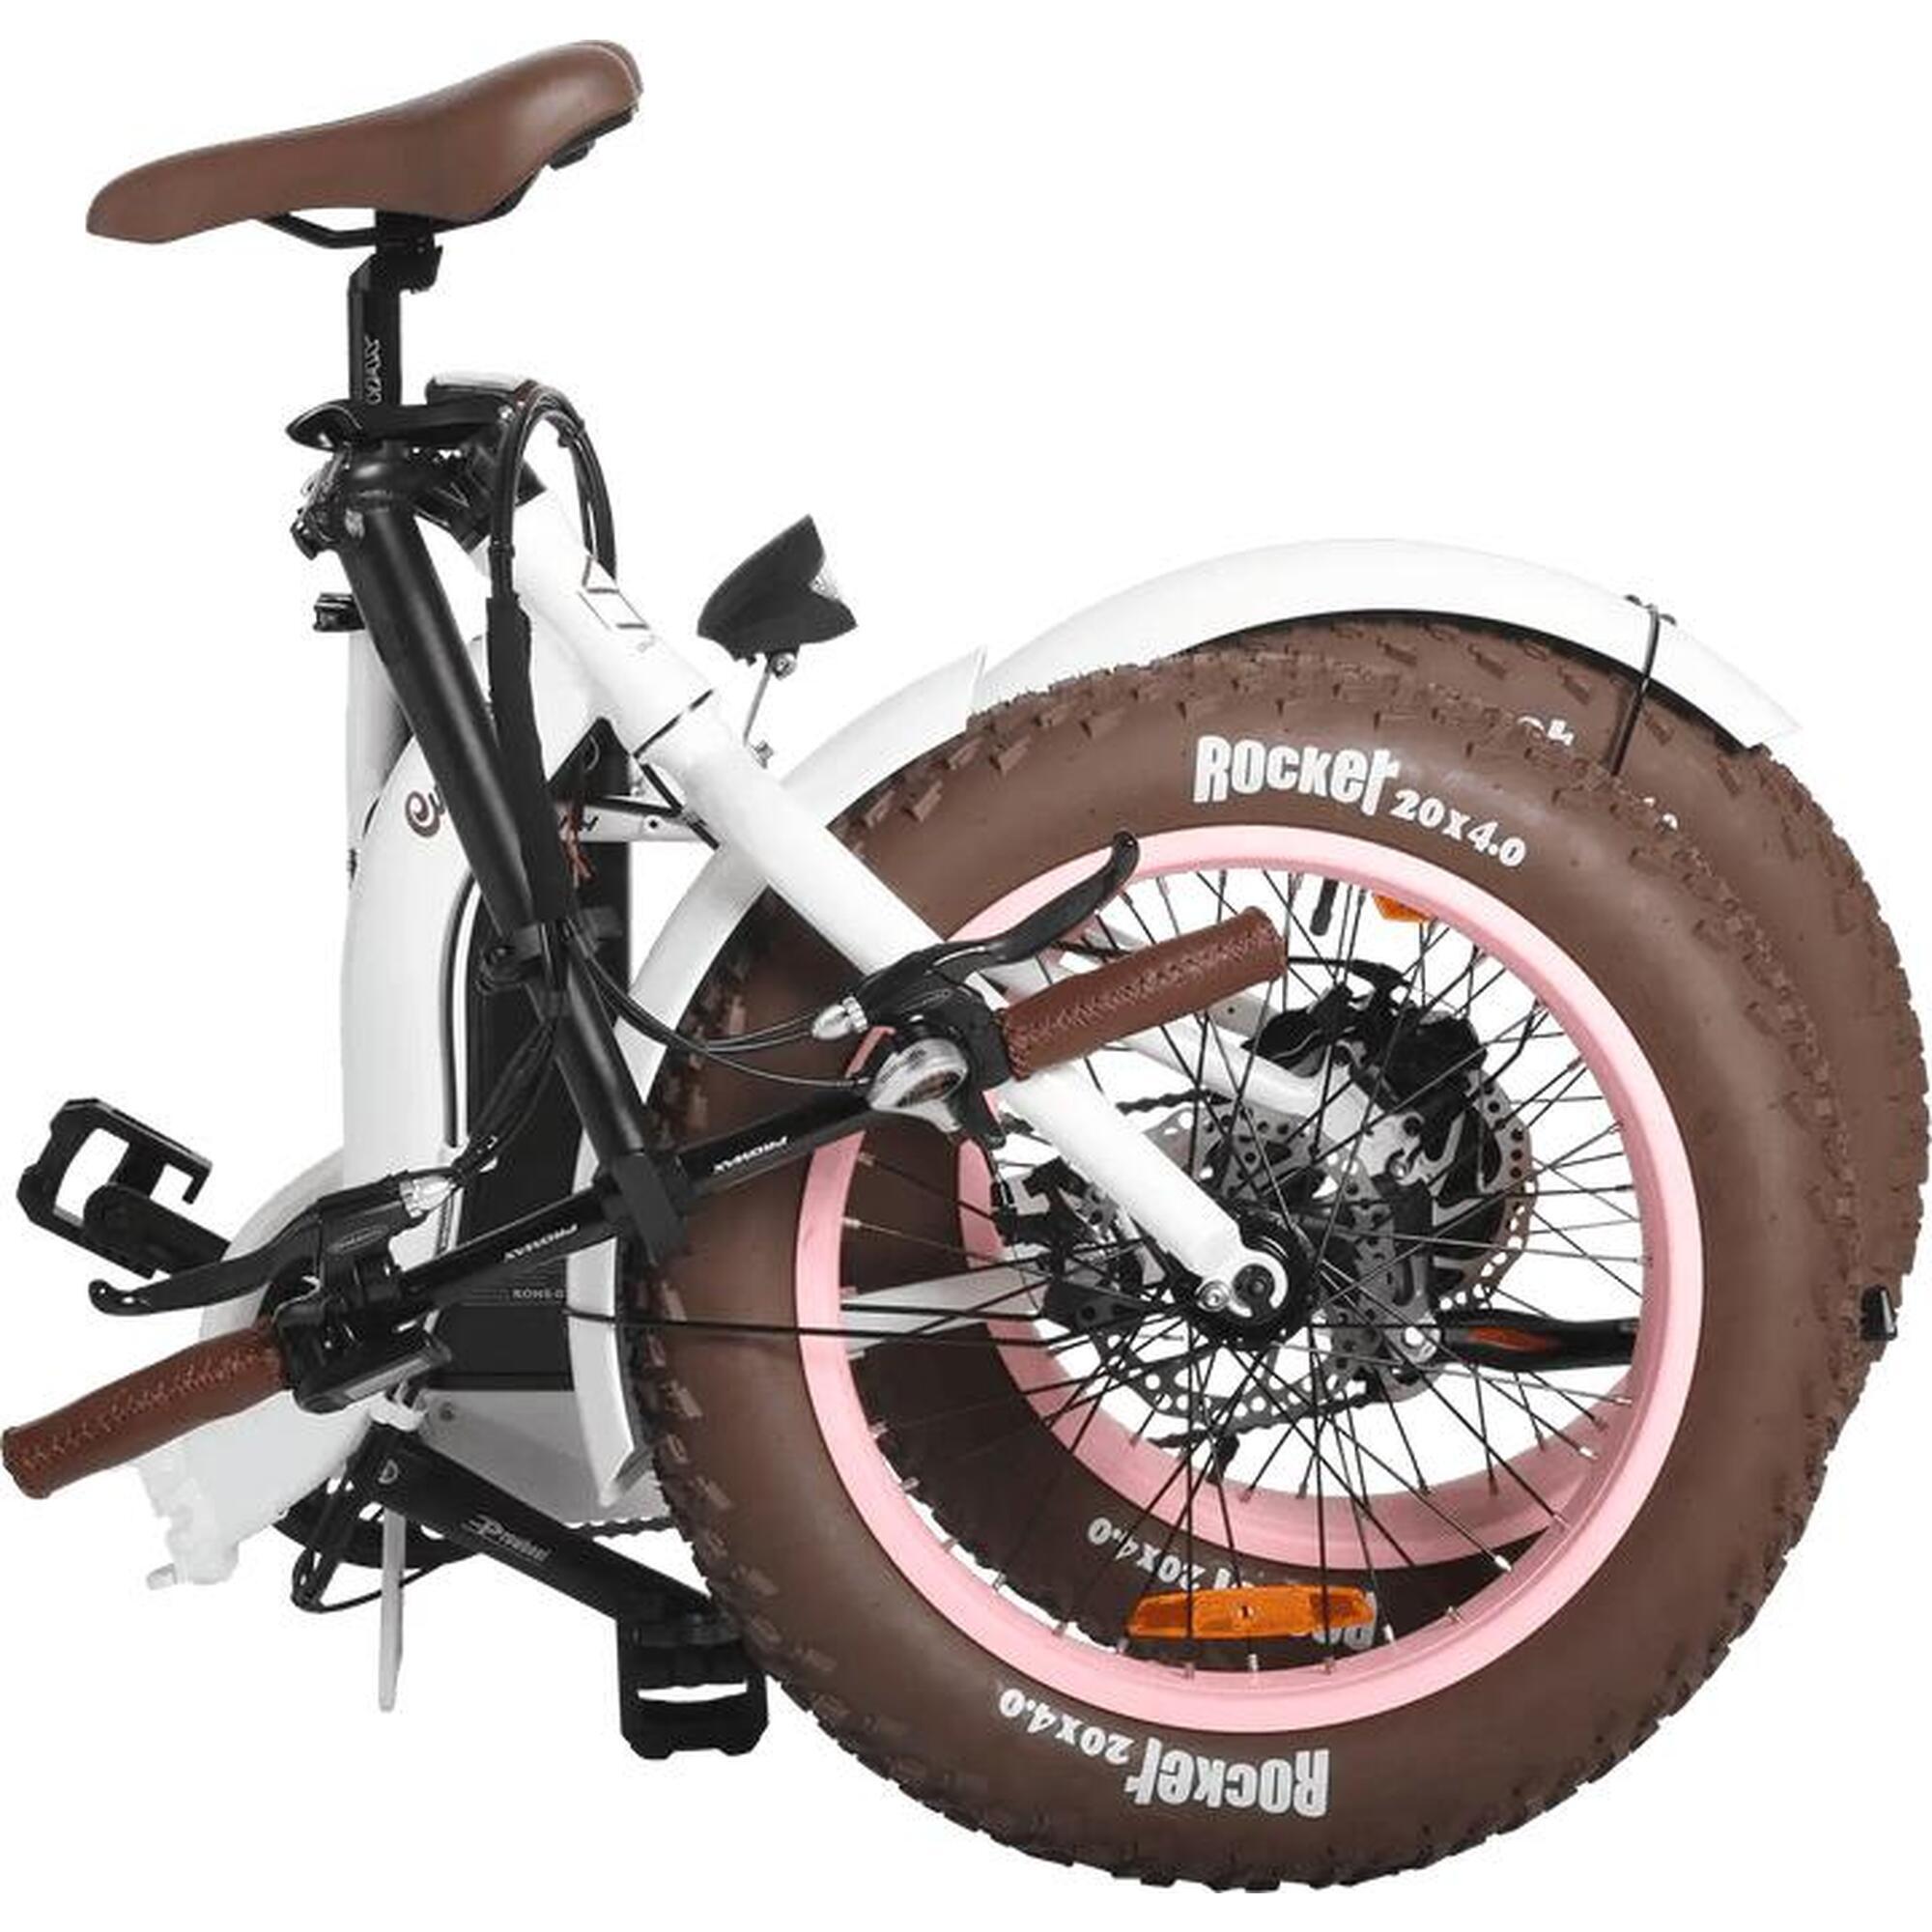 Vélo Electrique Voltaway Cupcake Pliable White/Brown/Pink